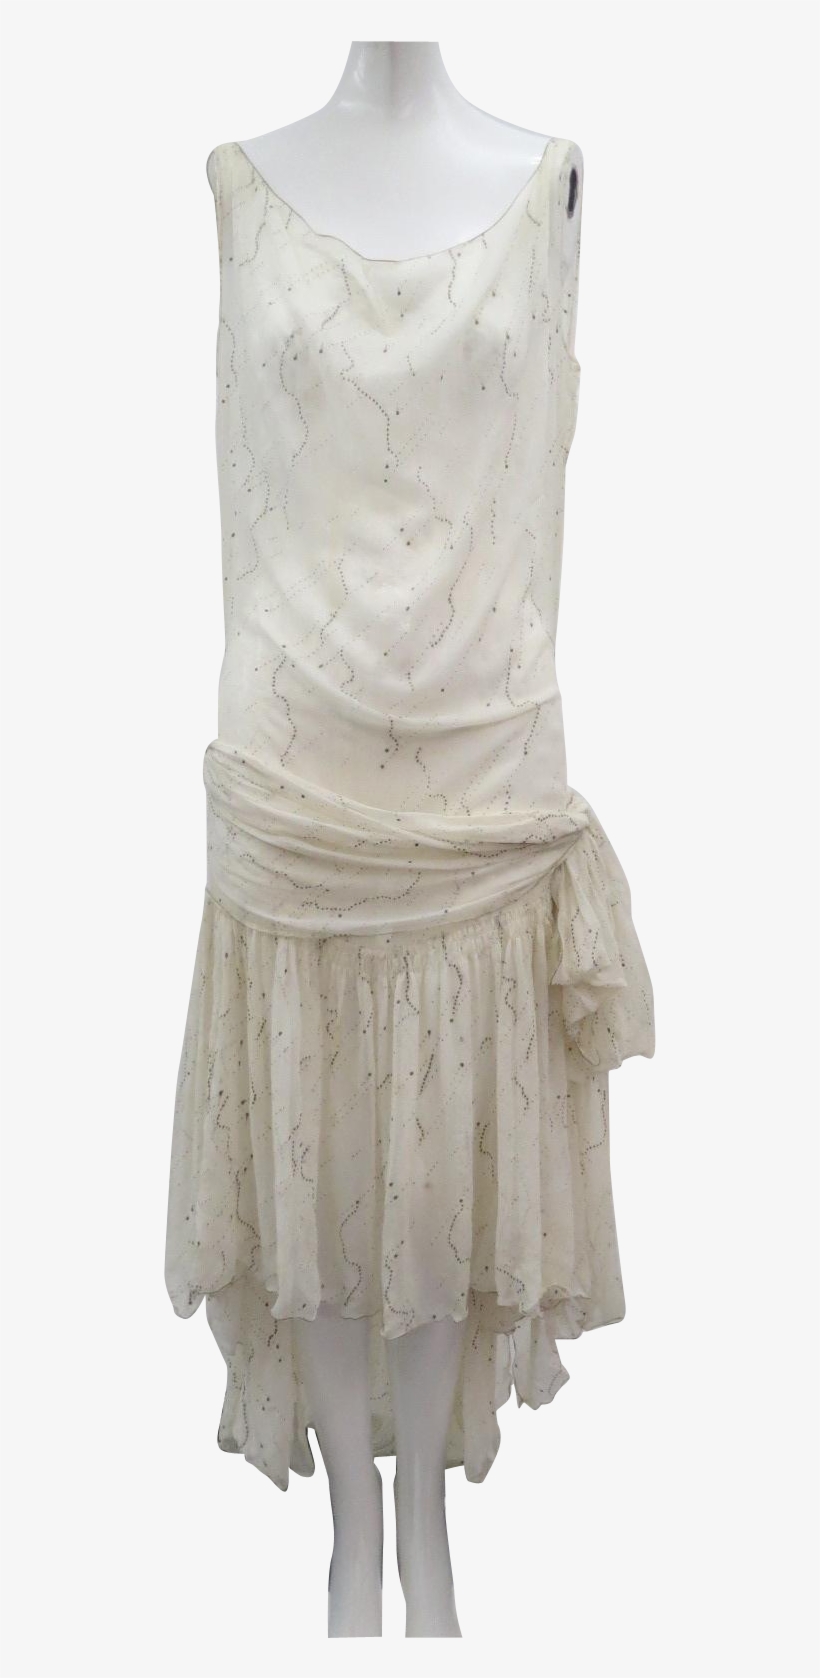 This Is An Original 1920s, Art Deco Period Flapper - Cocktail Dress, transparent png #7662421